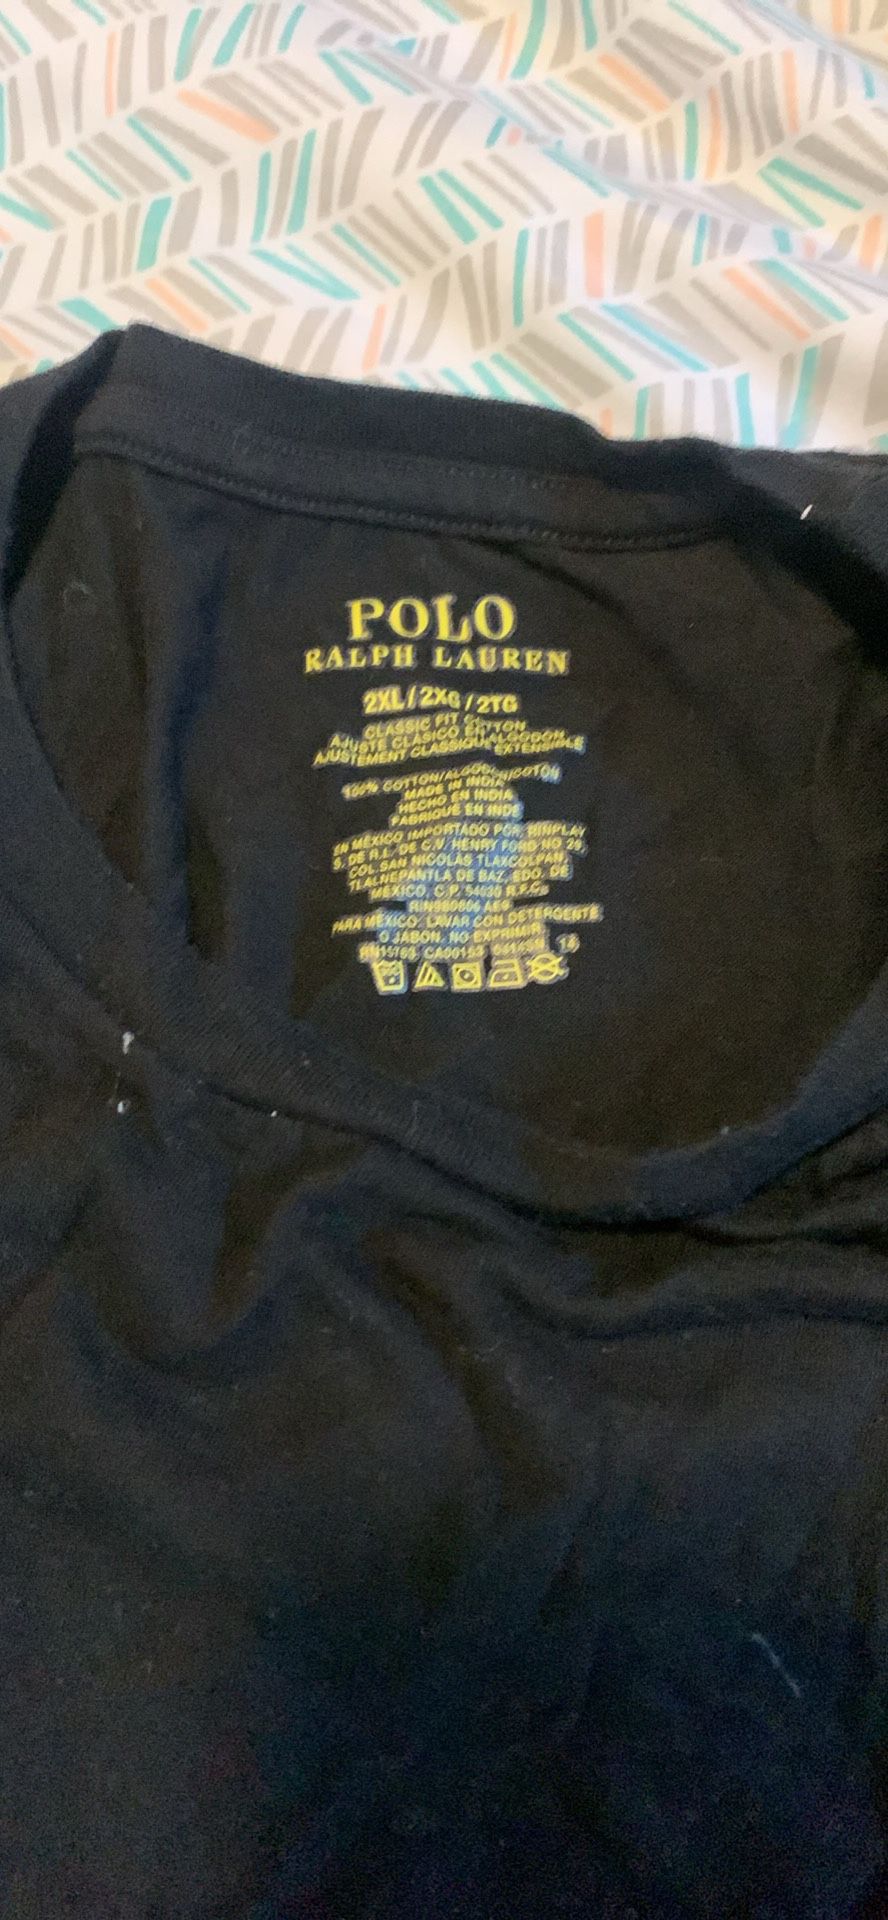 Polo Shirt Size 2xl